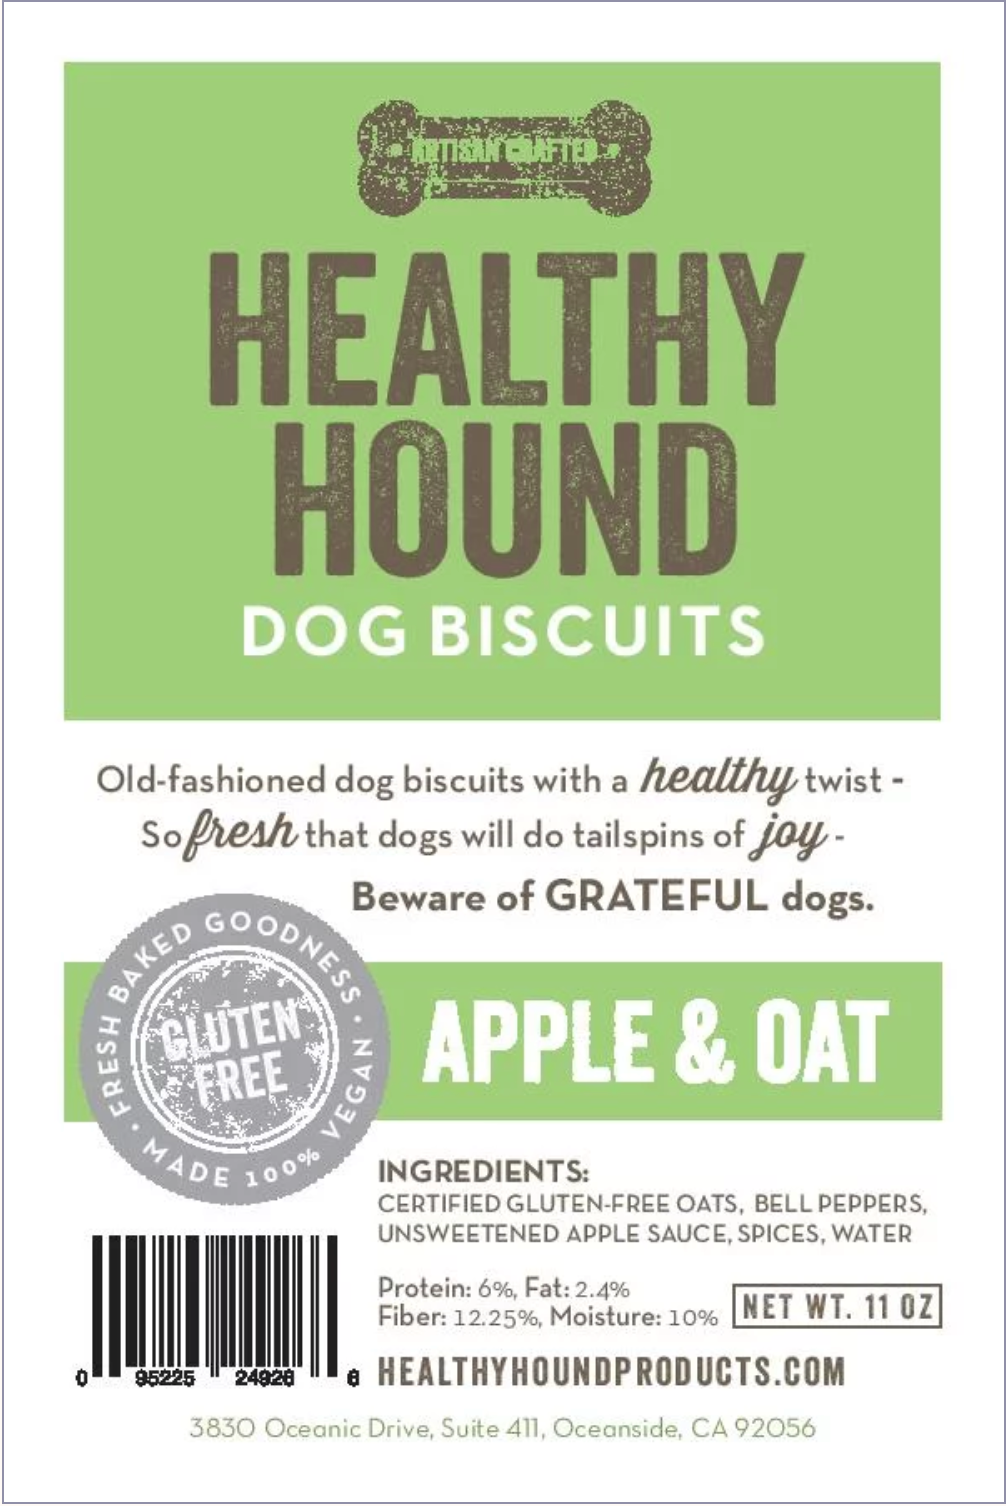 Healthy Hound Dog Biscuits - CJ Gift Shoppe